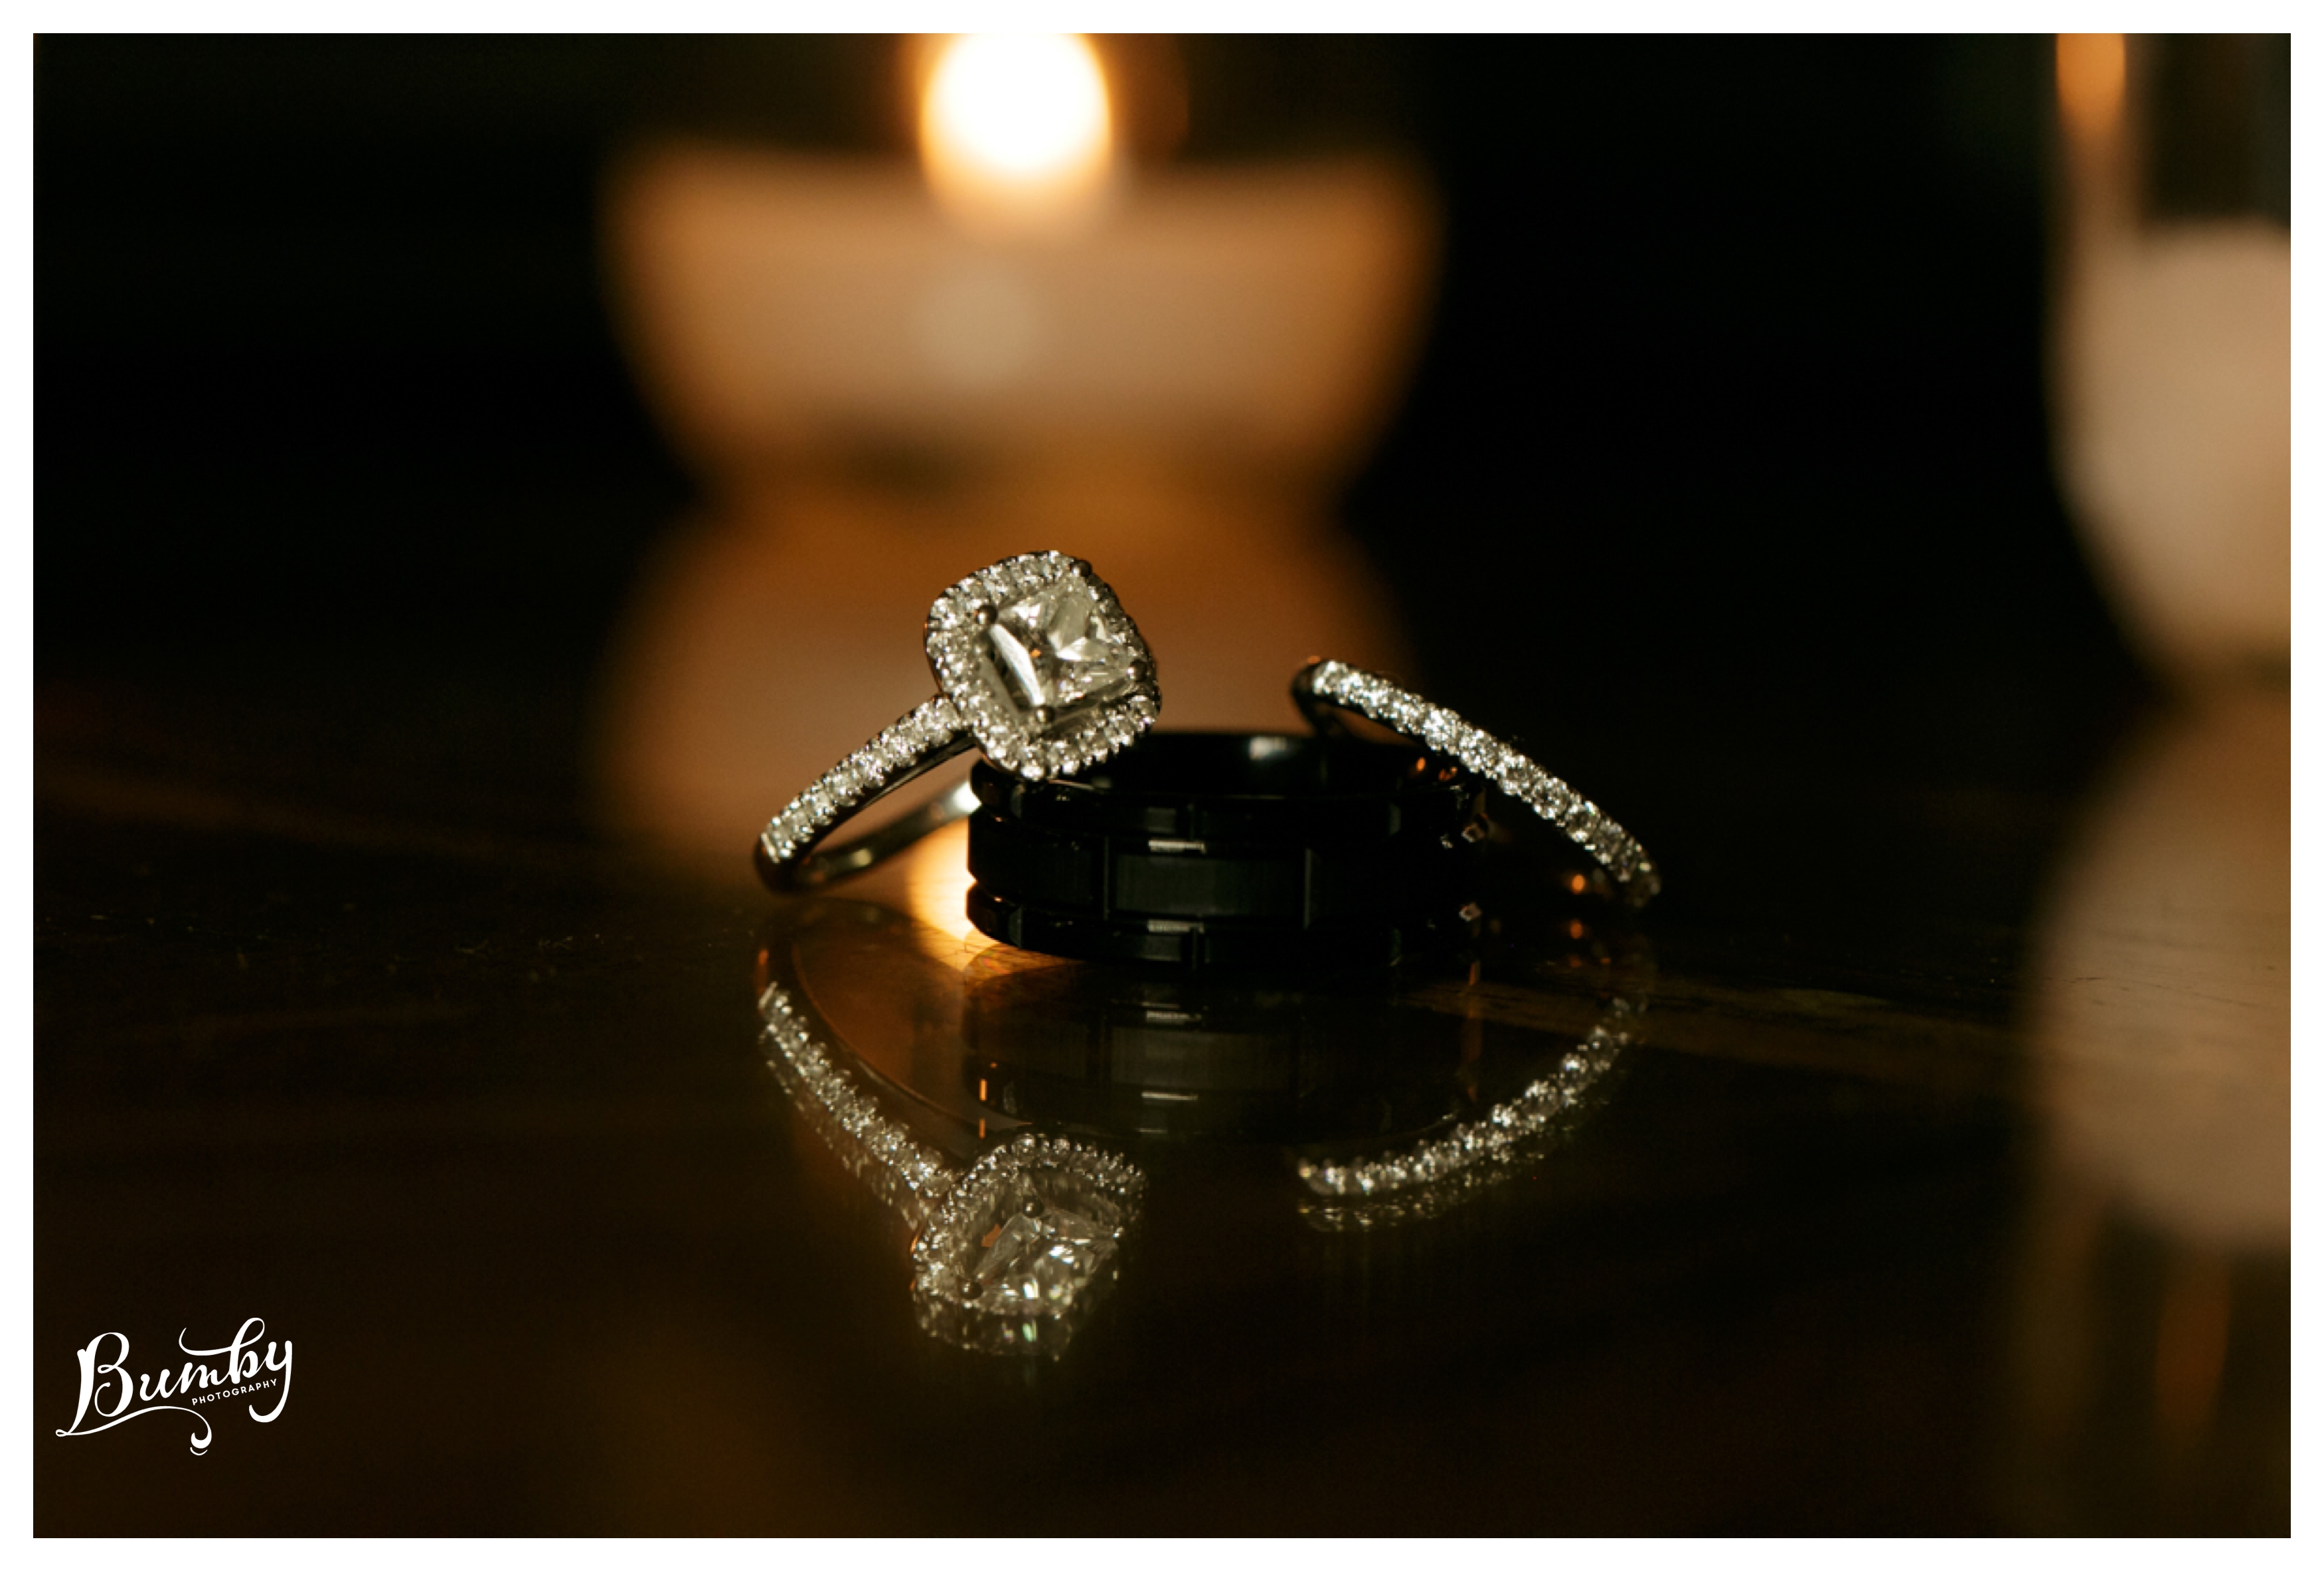 square diamond wedding ring reflecting on glass